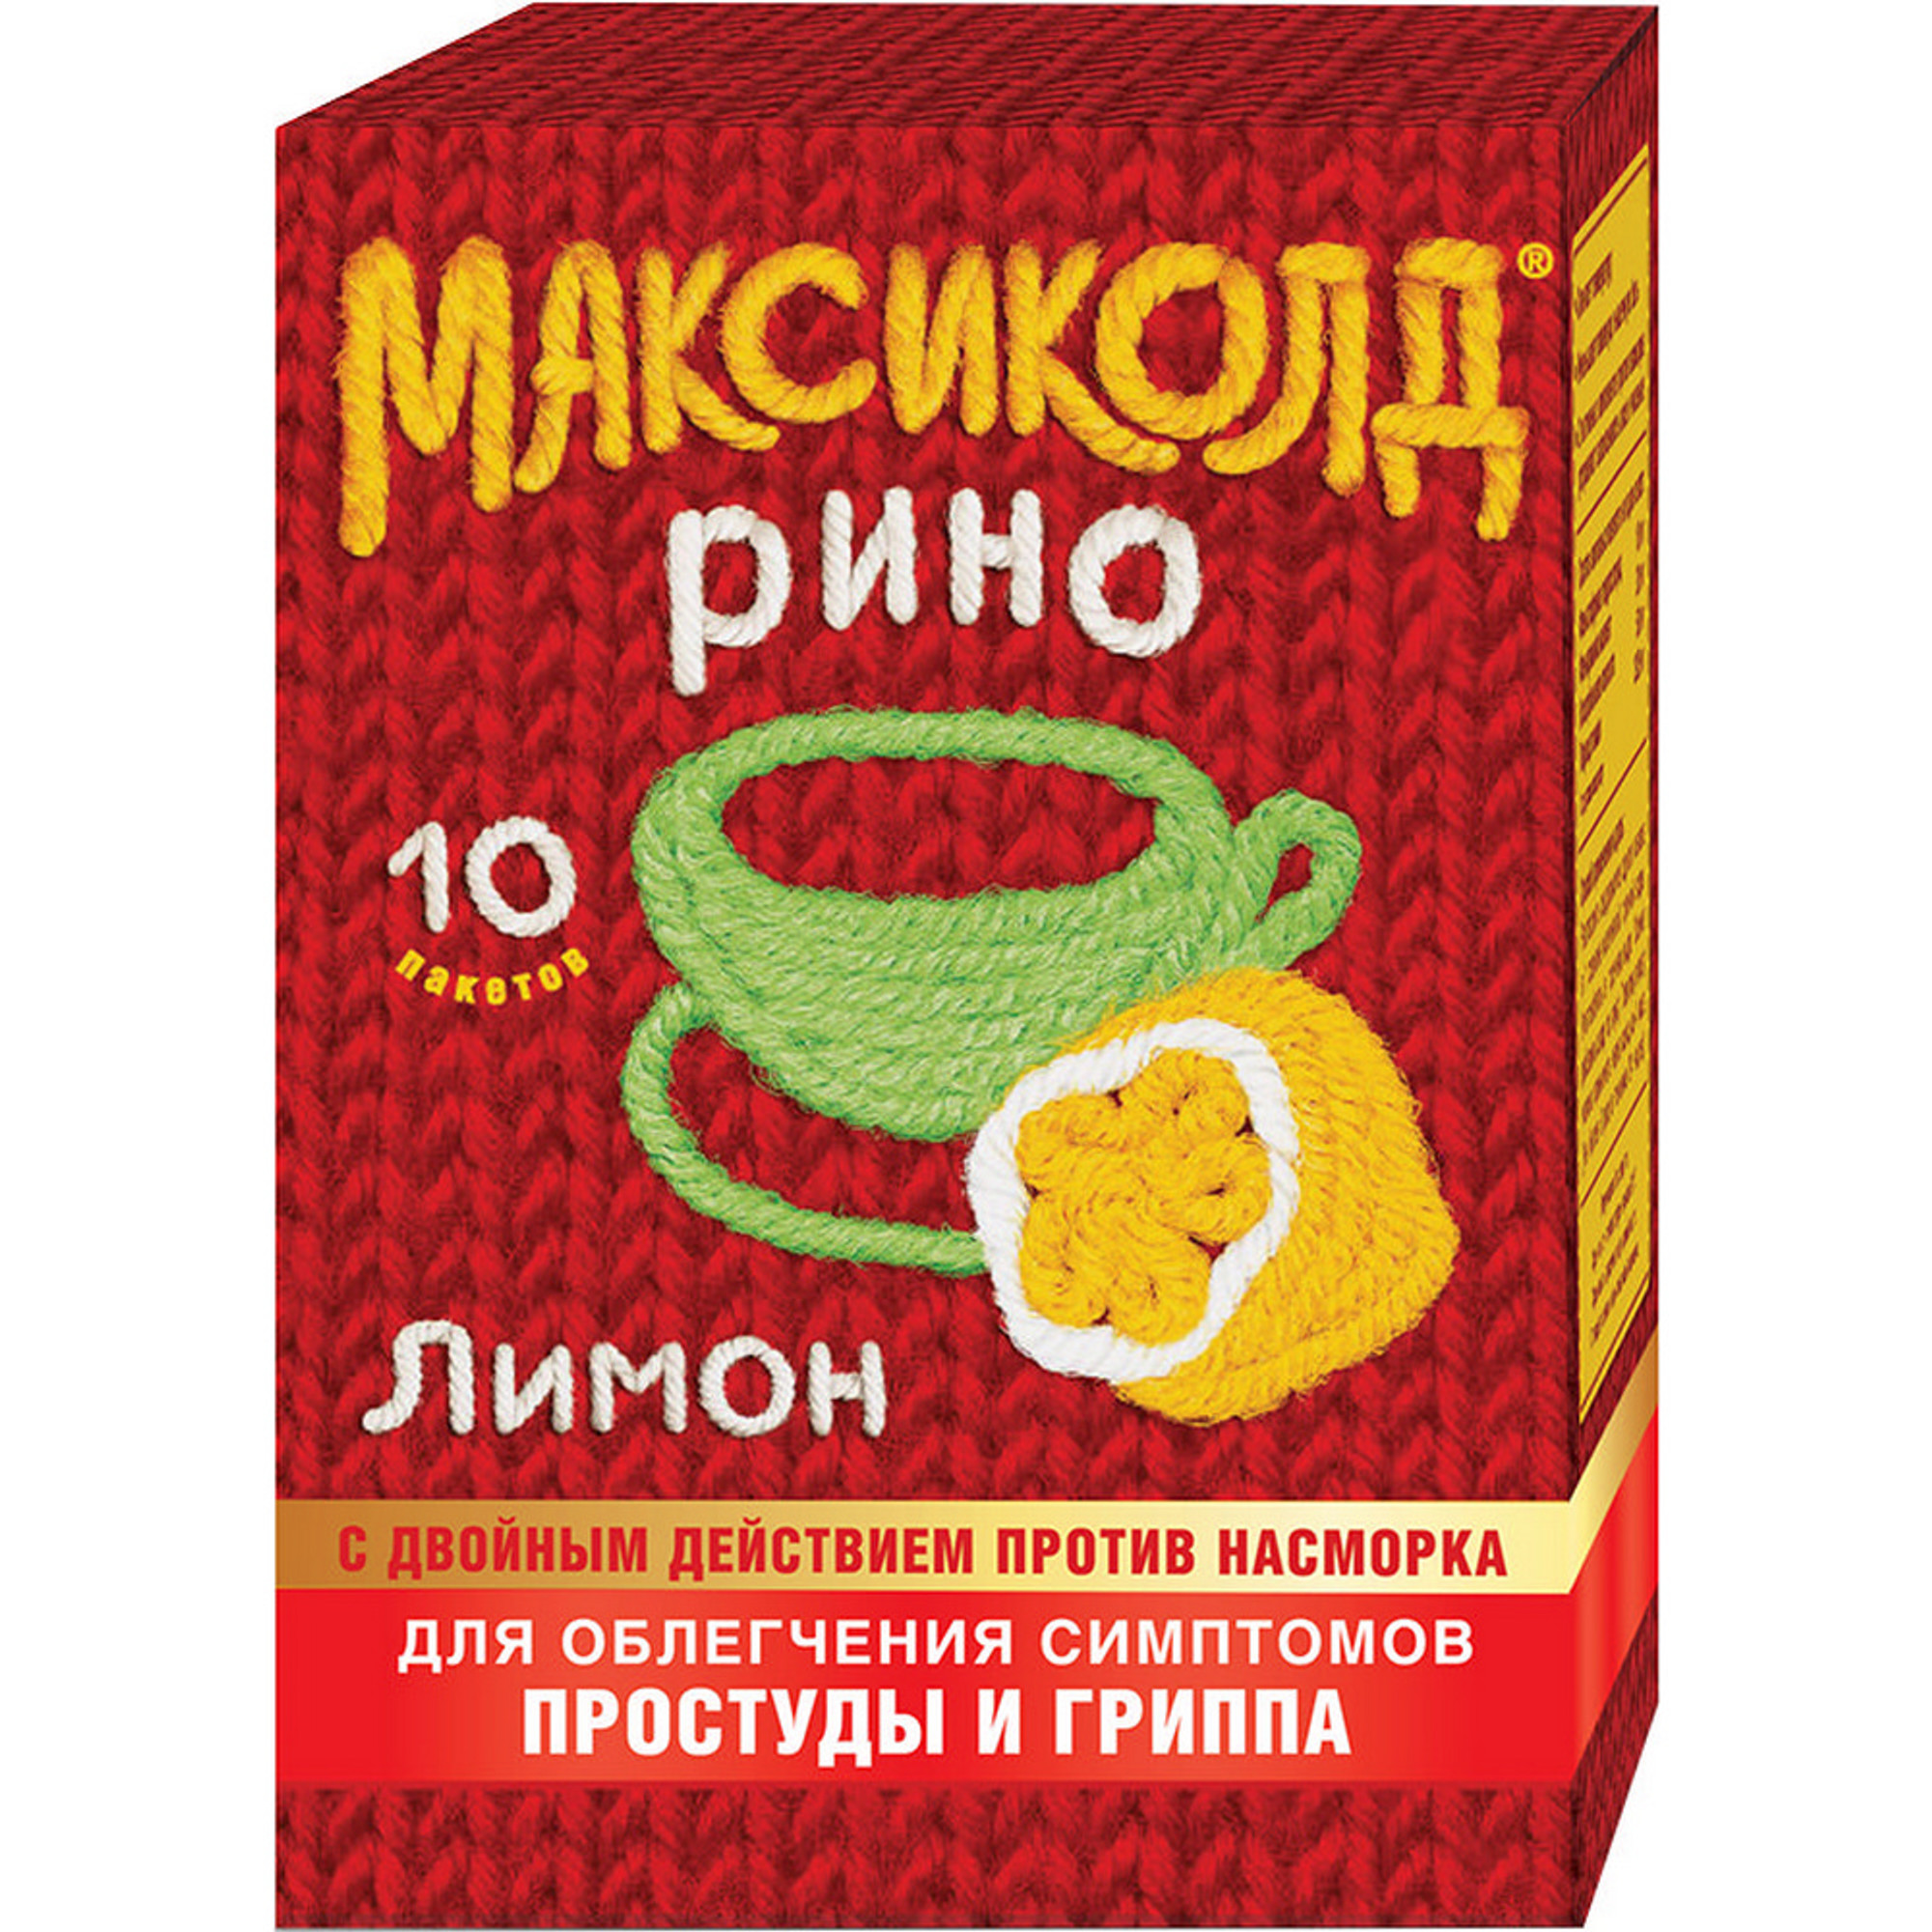 Максиколд Рино, порошок (лимон), пакетики 15 г, 10 шт. максиколд рино порошок апельсин пакетики 15 г 10 шт